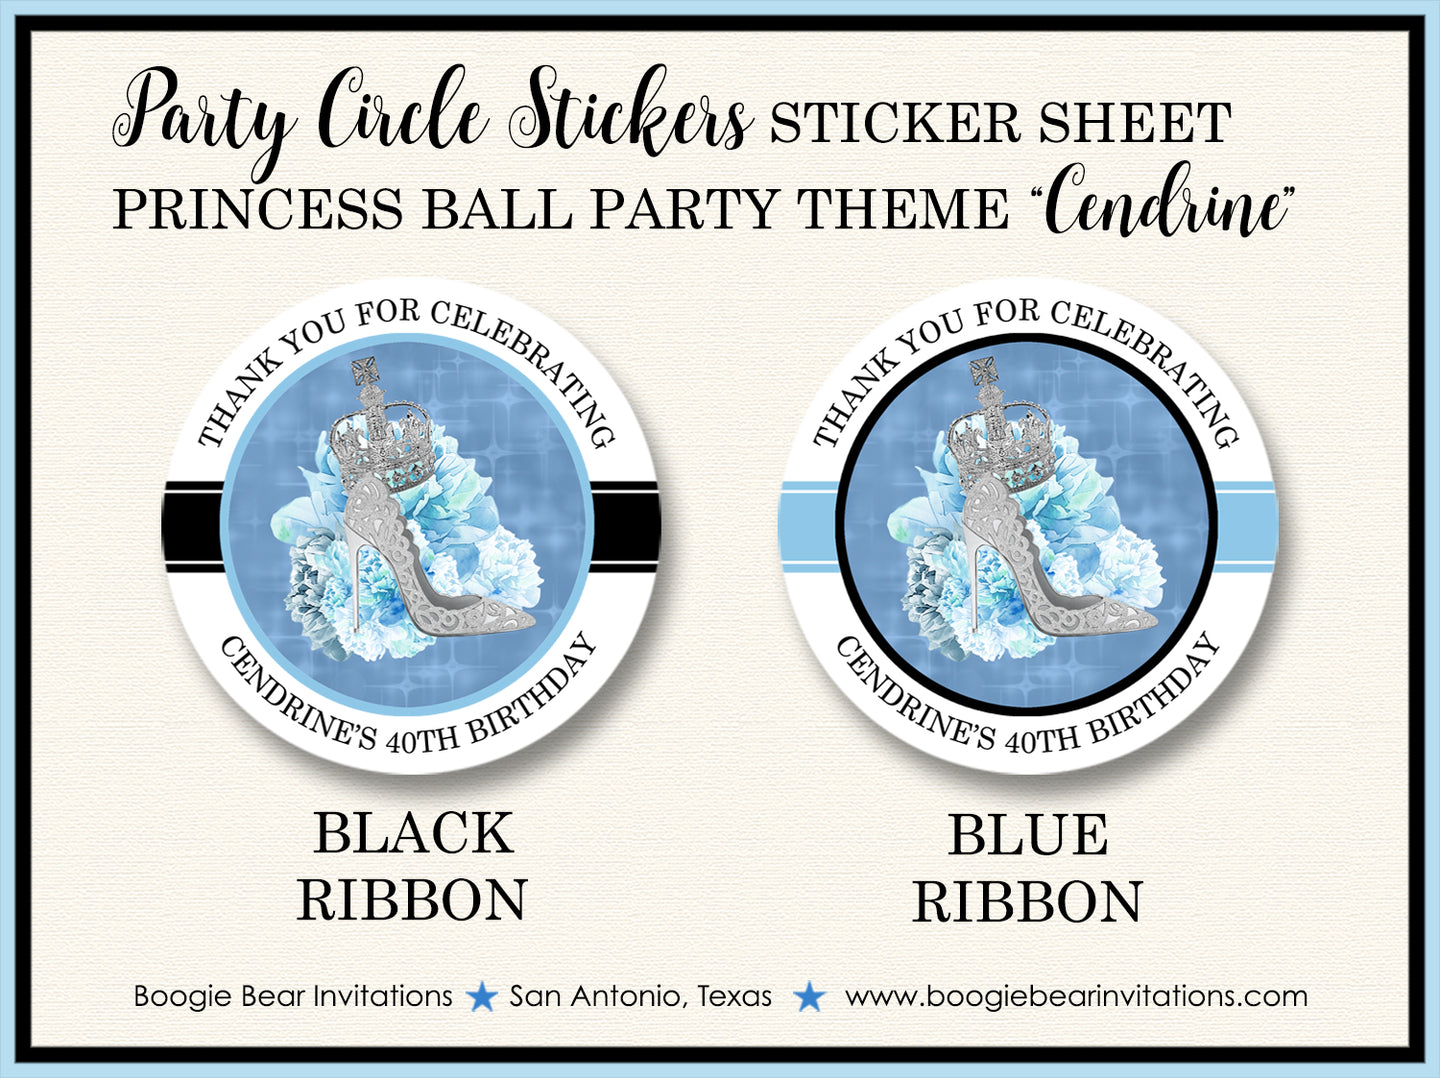 Princess Ball Party Stickers Circle Sheet Round Birthday Blue Crown Cinderella Boogie Bear Invitations Cendrine Theme